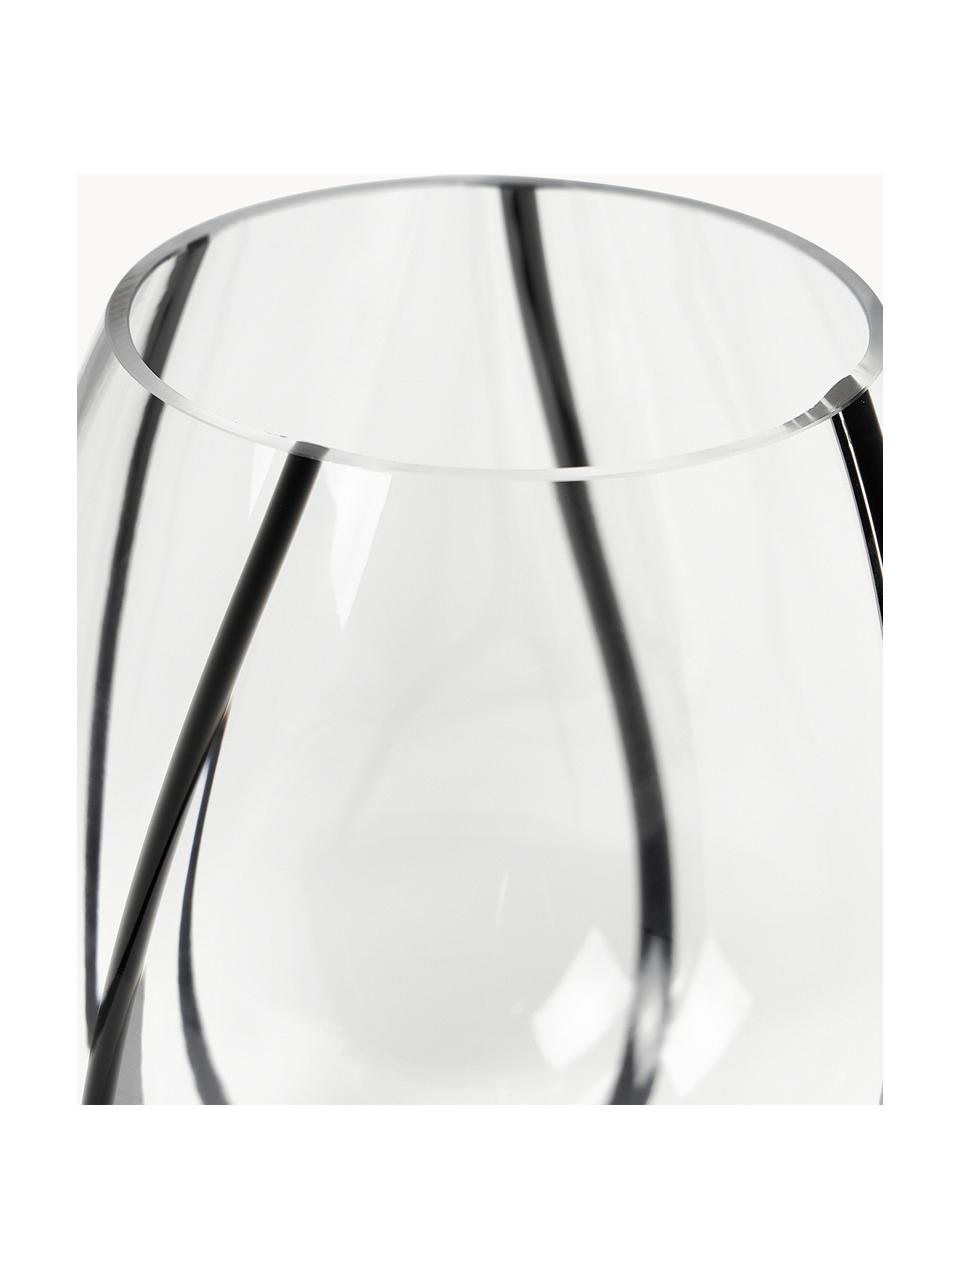 Glazen vaas Kira, H 18 cm, Natronkalkglas, Transparant, zwart, Ø 17 x H 18 cm